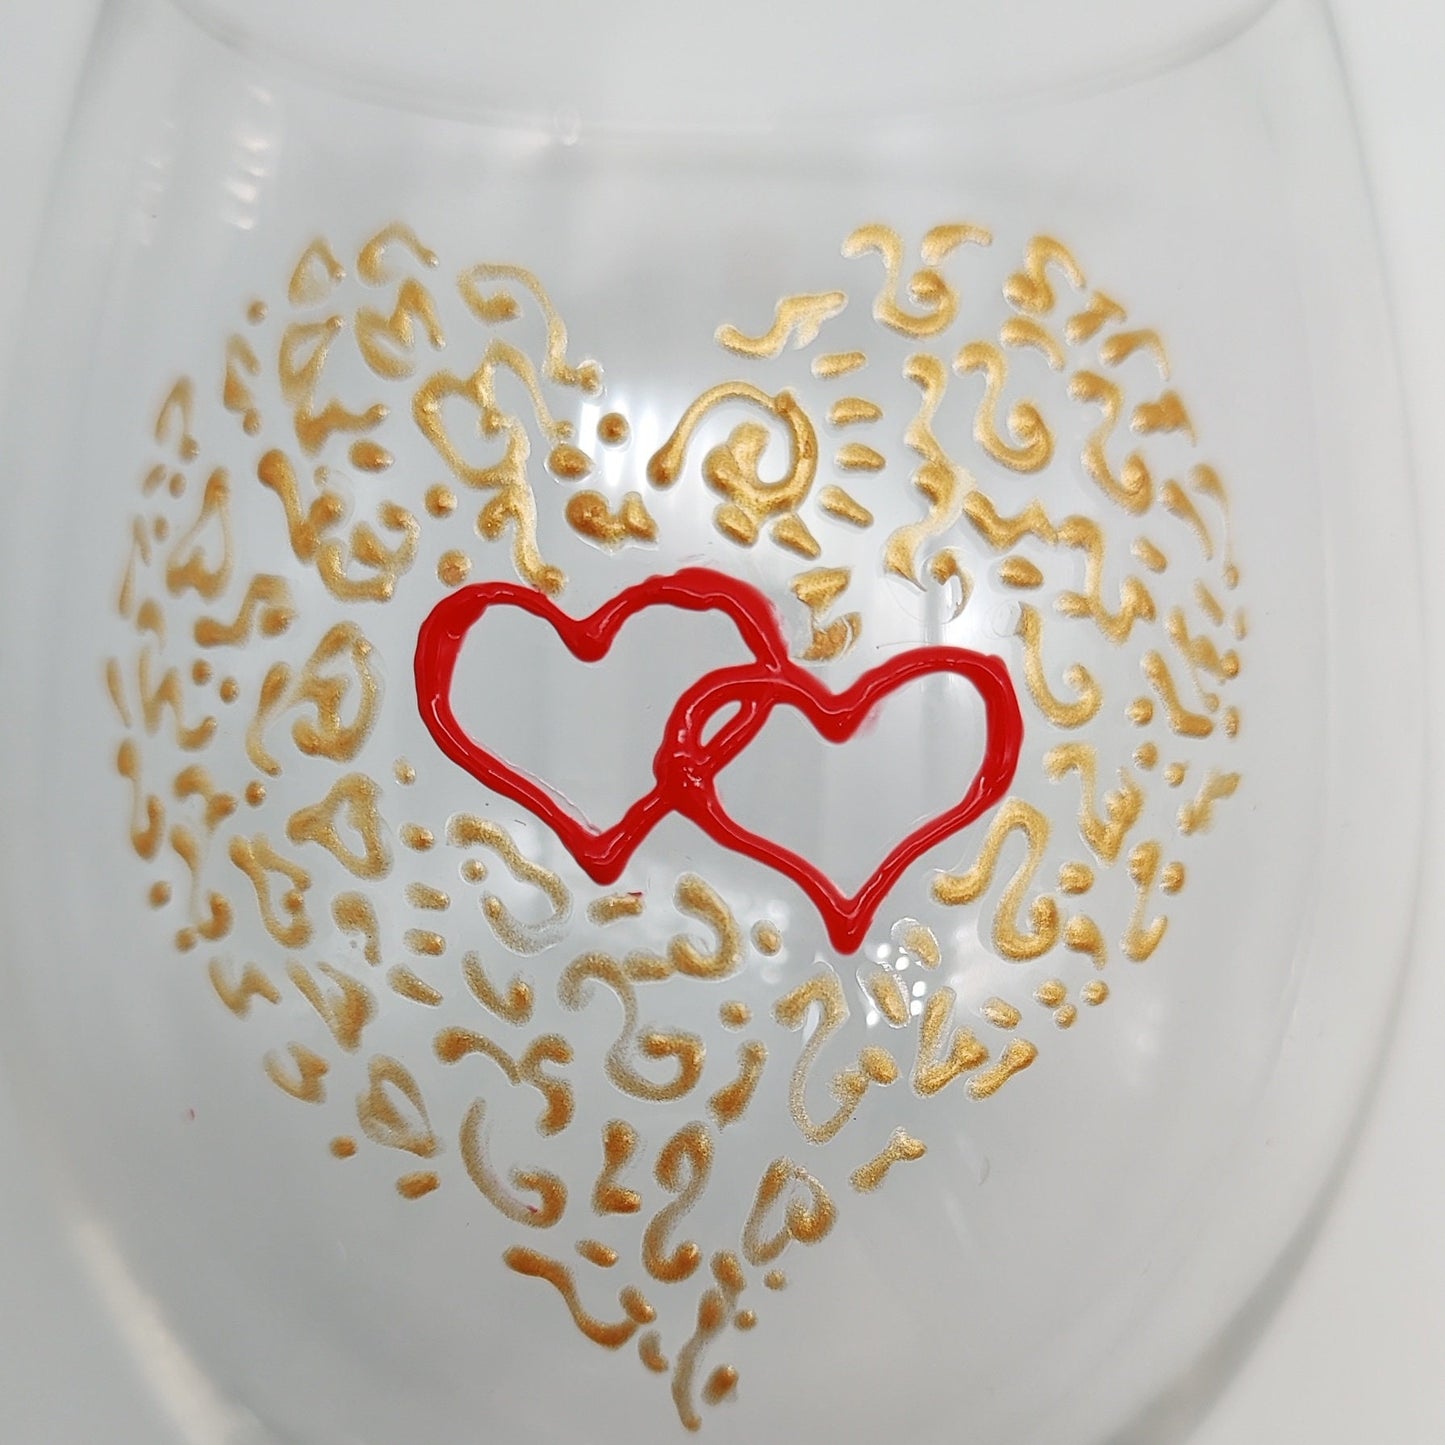 Valentine hearts design beer glass glass